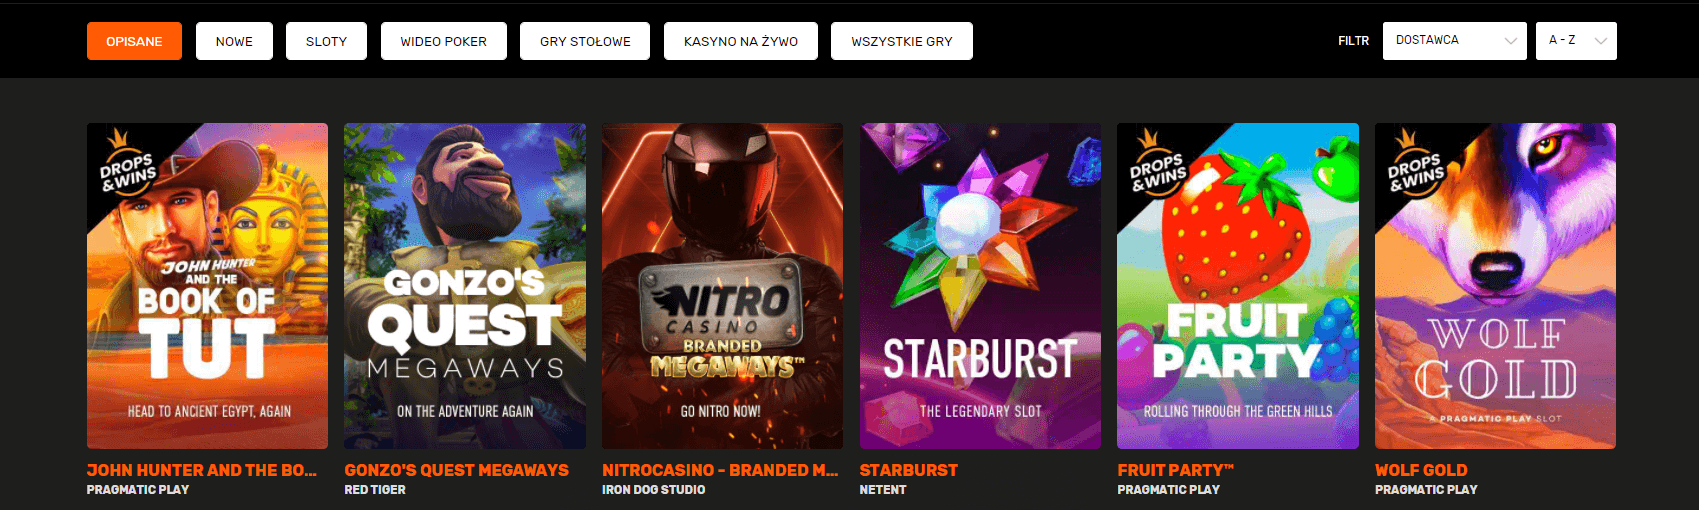 nitro casino gry hazardowe sloty screenshot